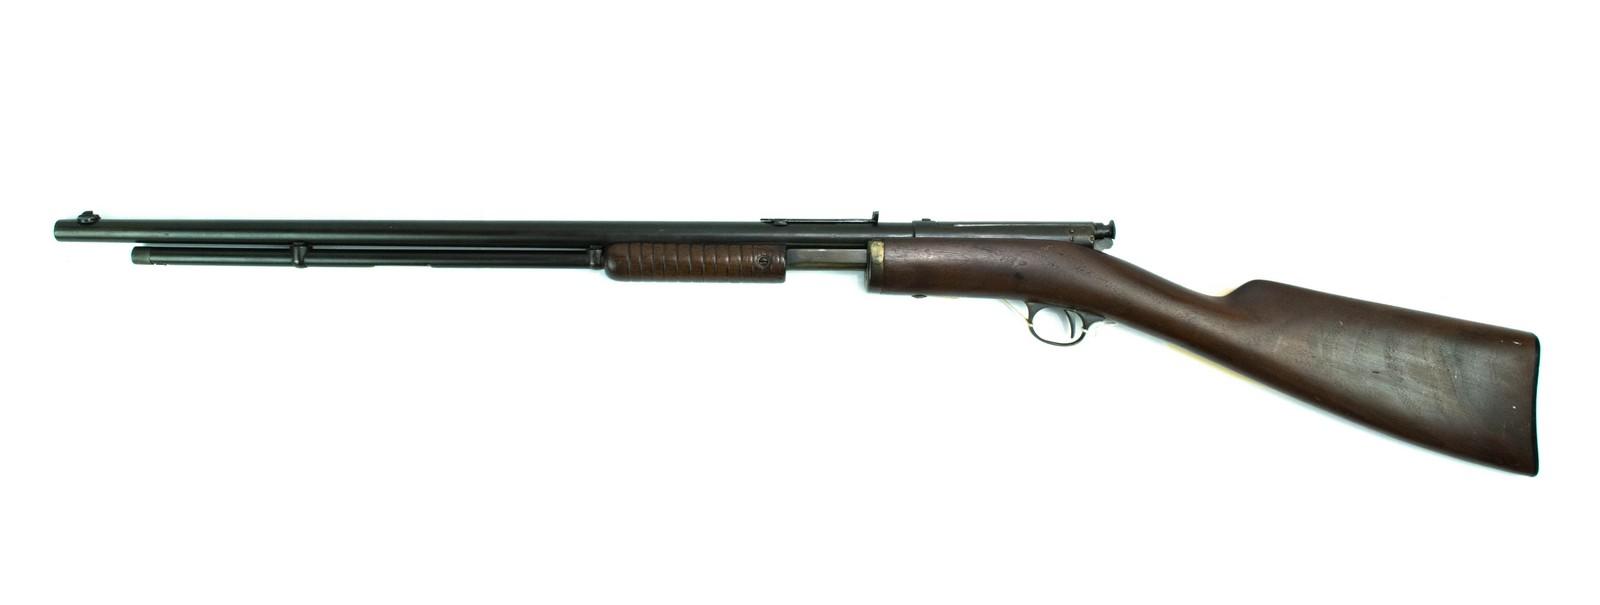 Stevens Model 80 Pump Rifle .22 Caliber